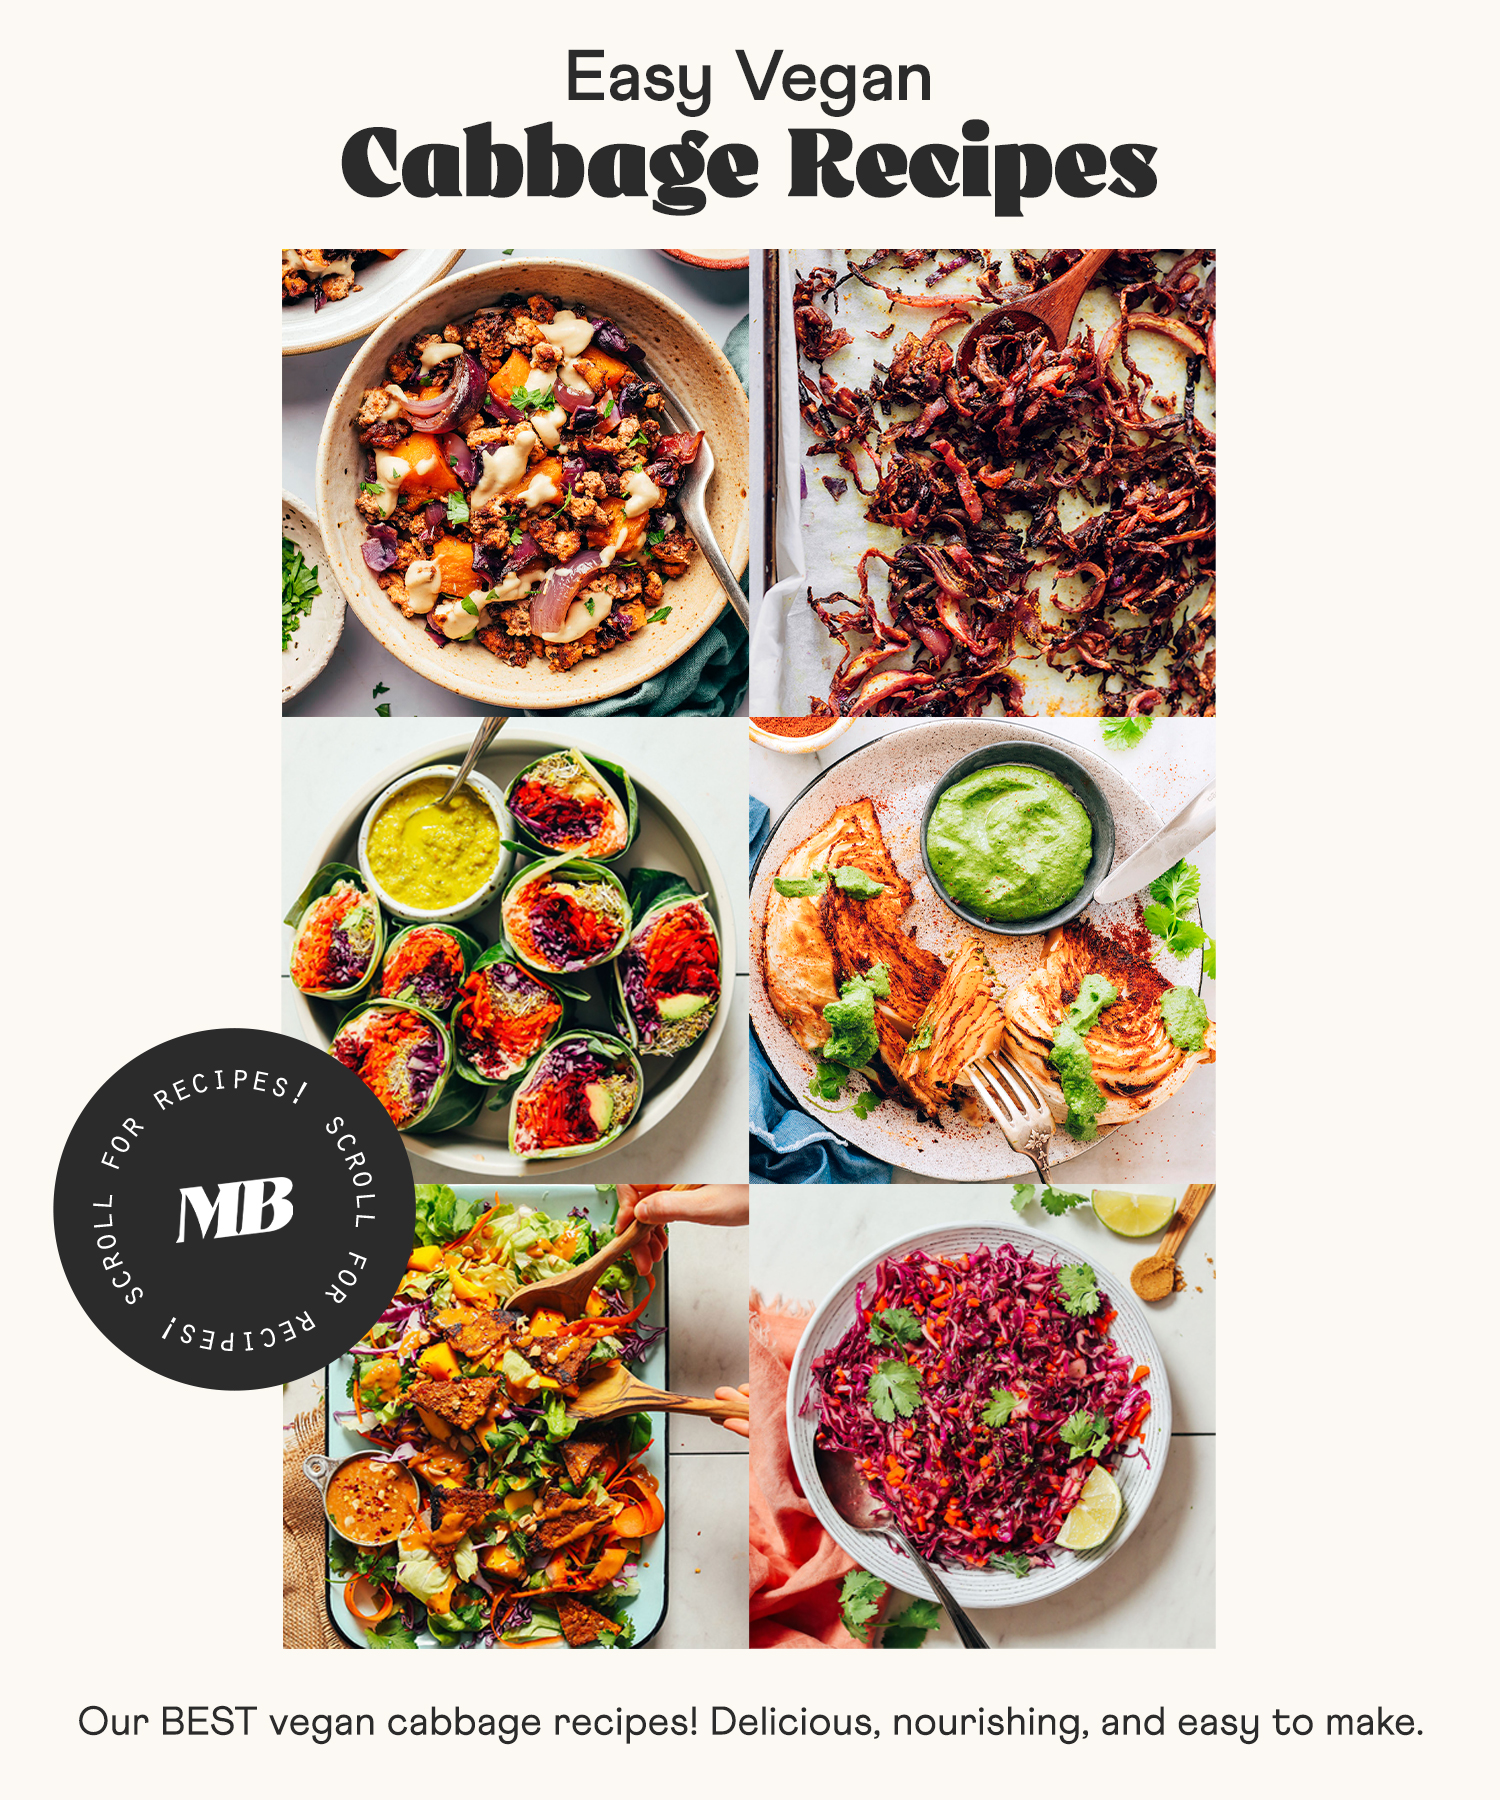 Image of easy vegan cabbage recipes